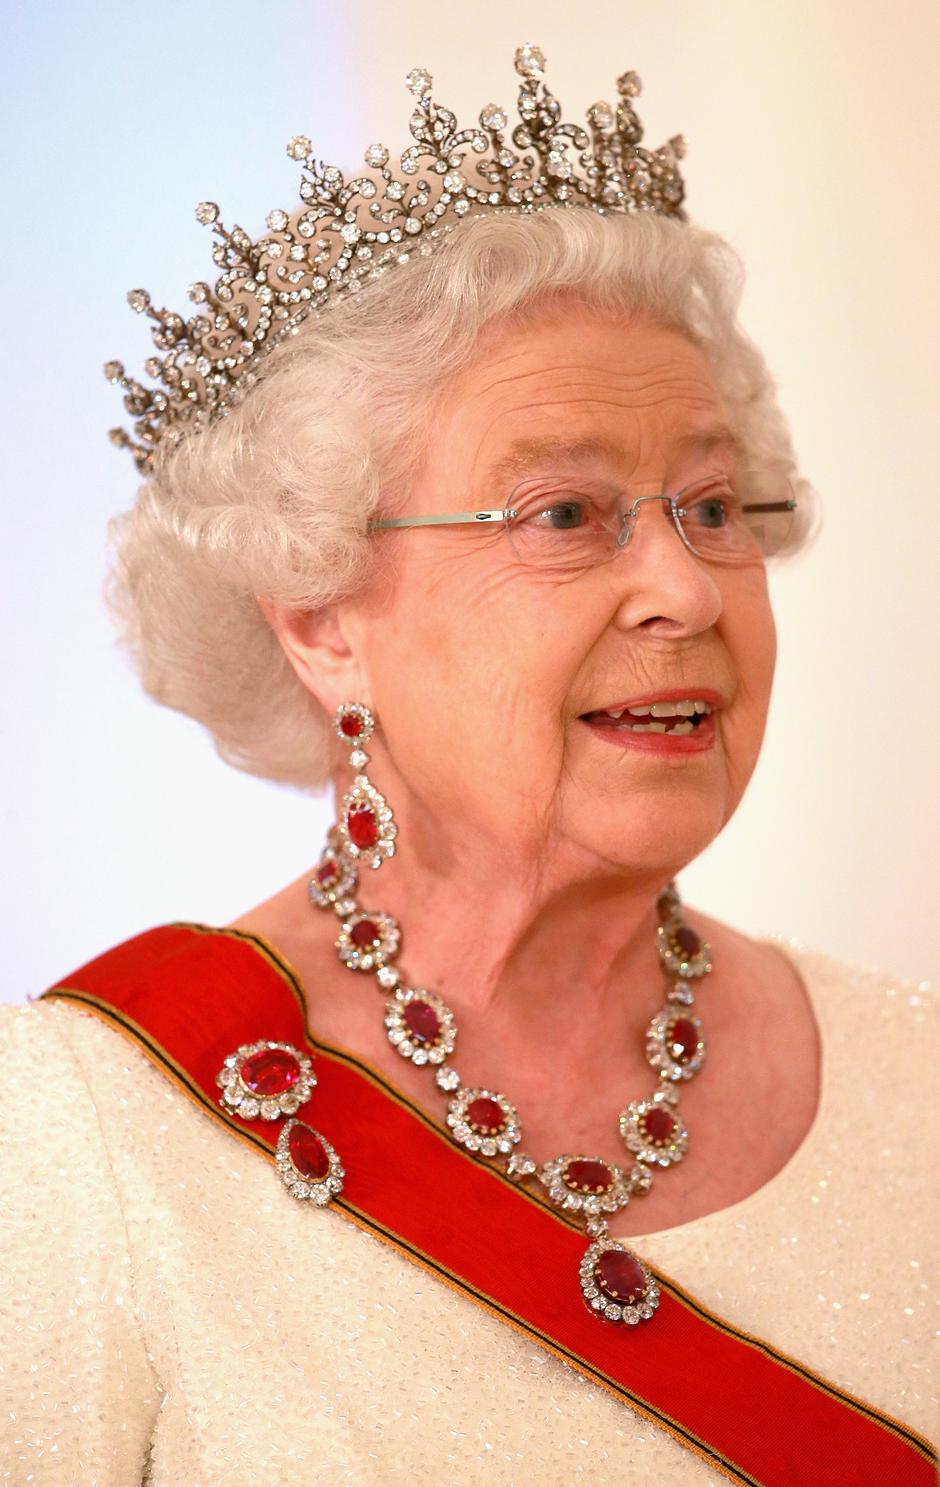 Kraljica Elizabeta II | Author: Press Association/PIXSELL